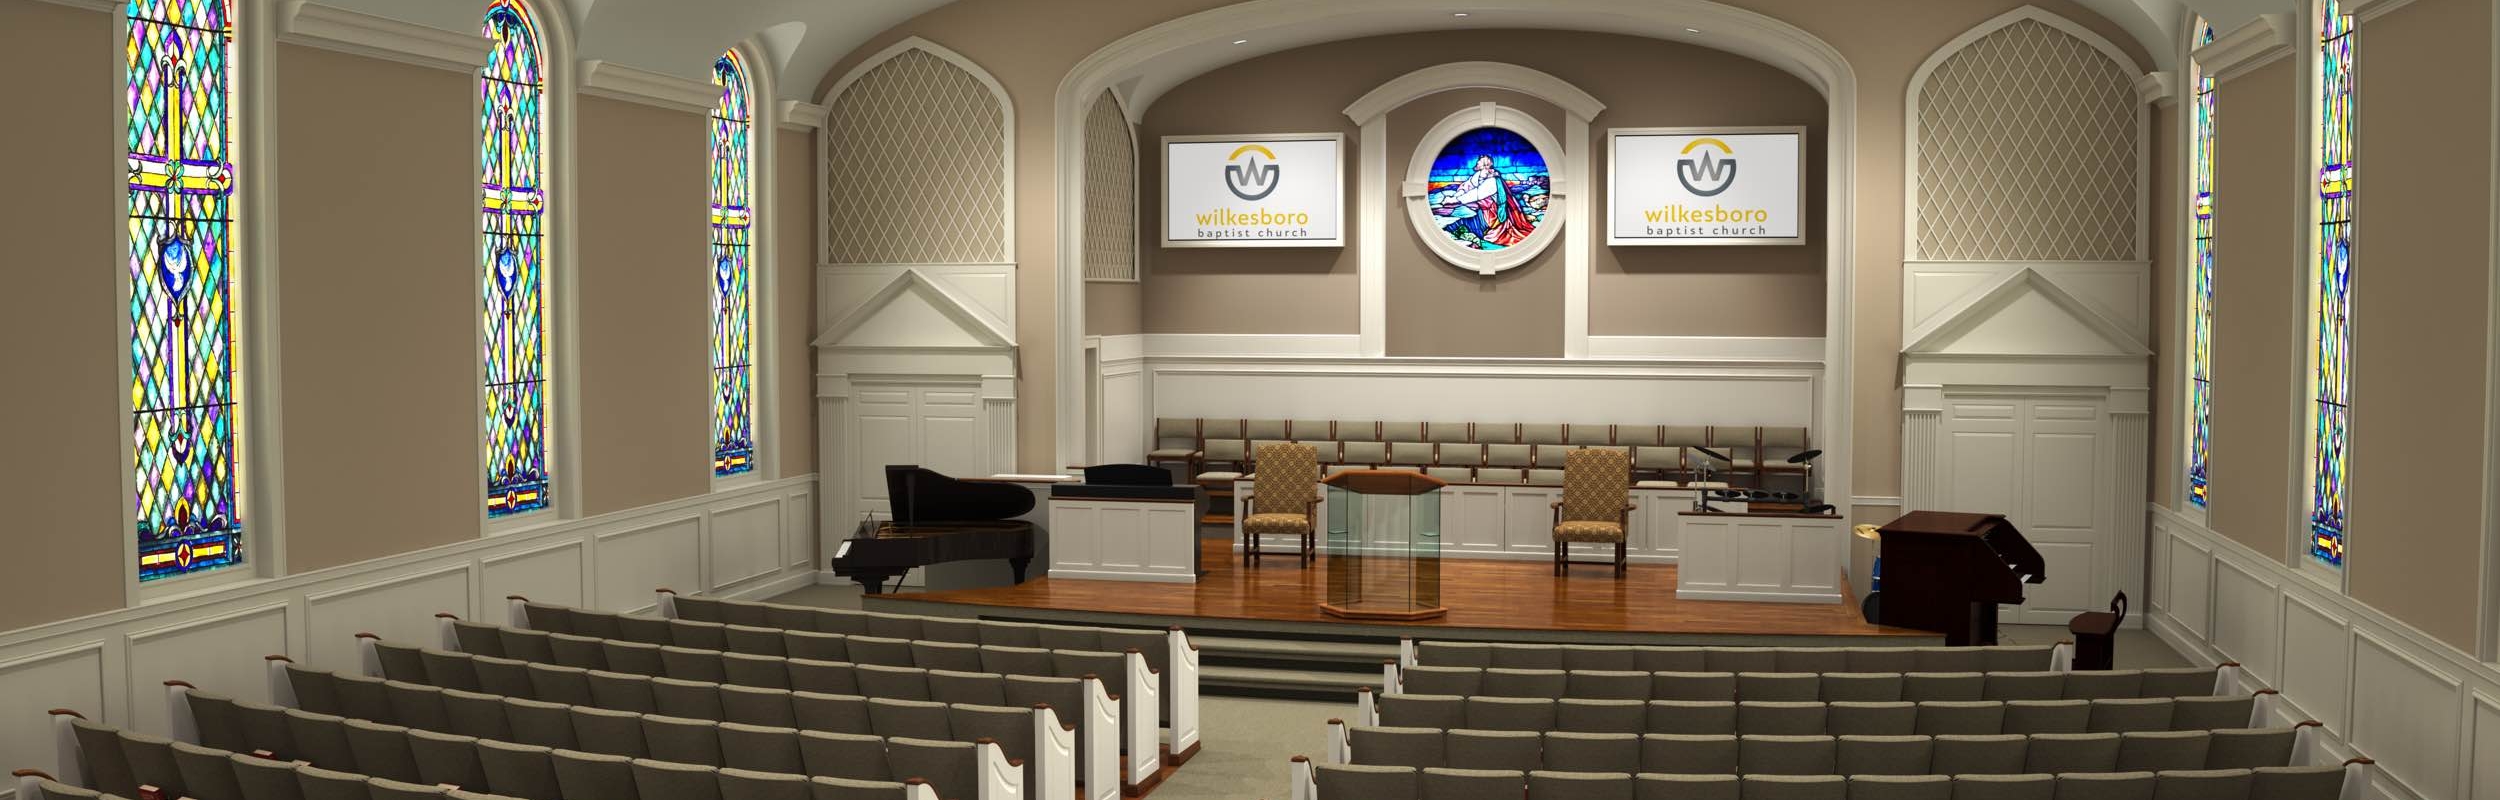 Church Renovations & Remodeling, Pew Restoration - Church Interiors